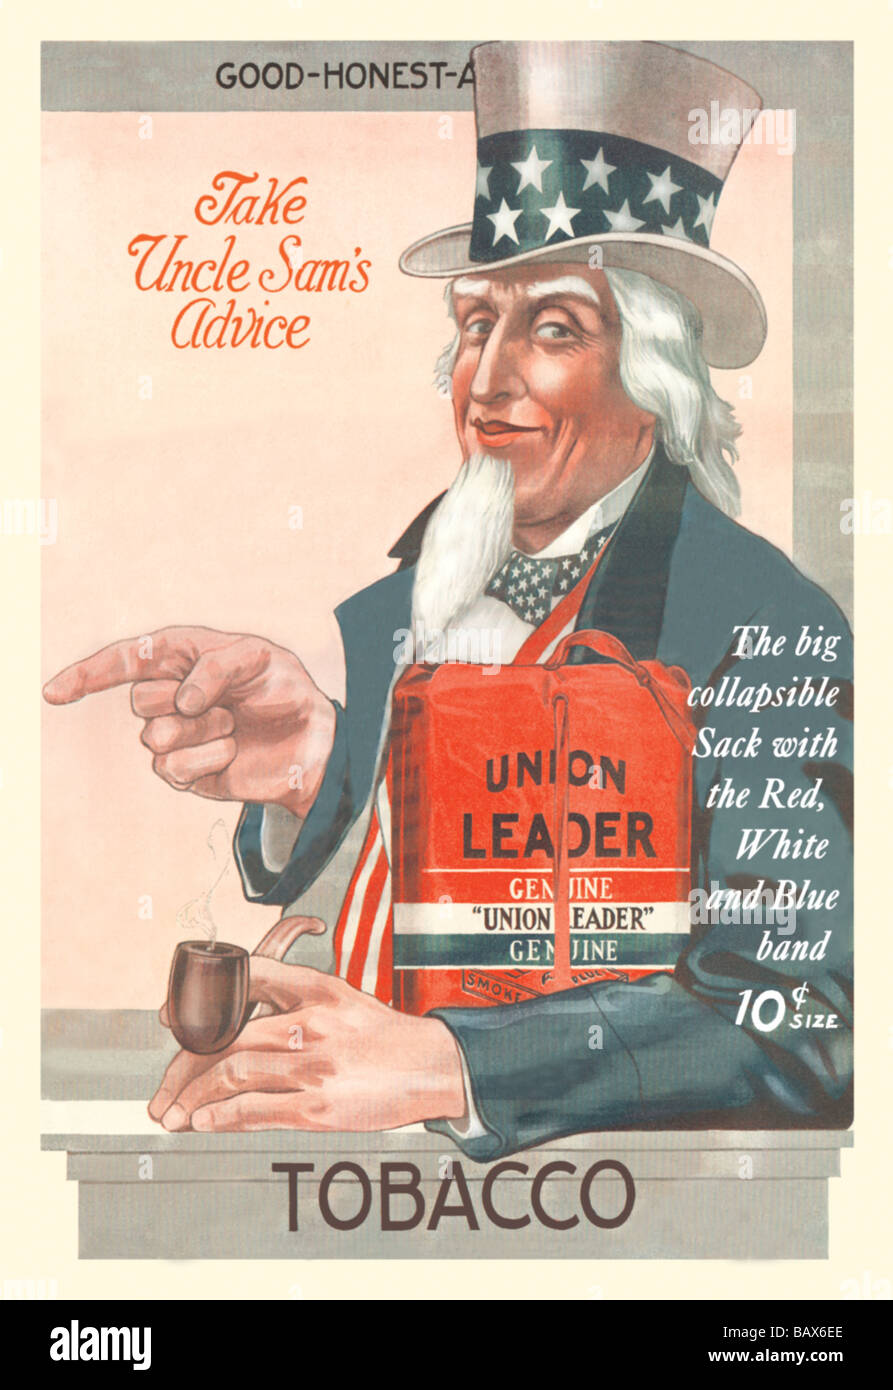 Take Uncle Sam's Advice - Union Leader Tobacco Stock Photo